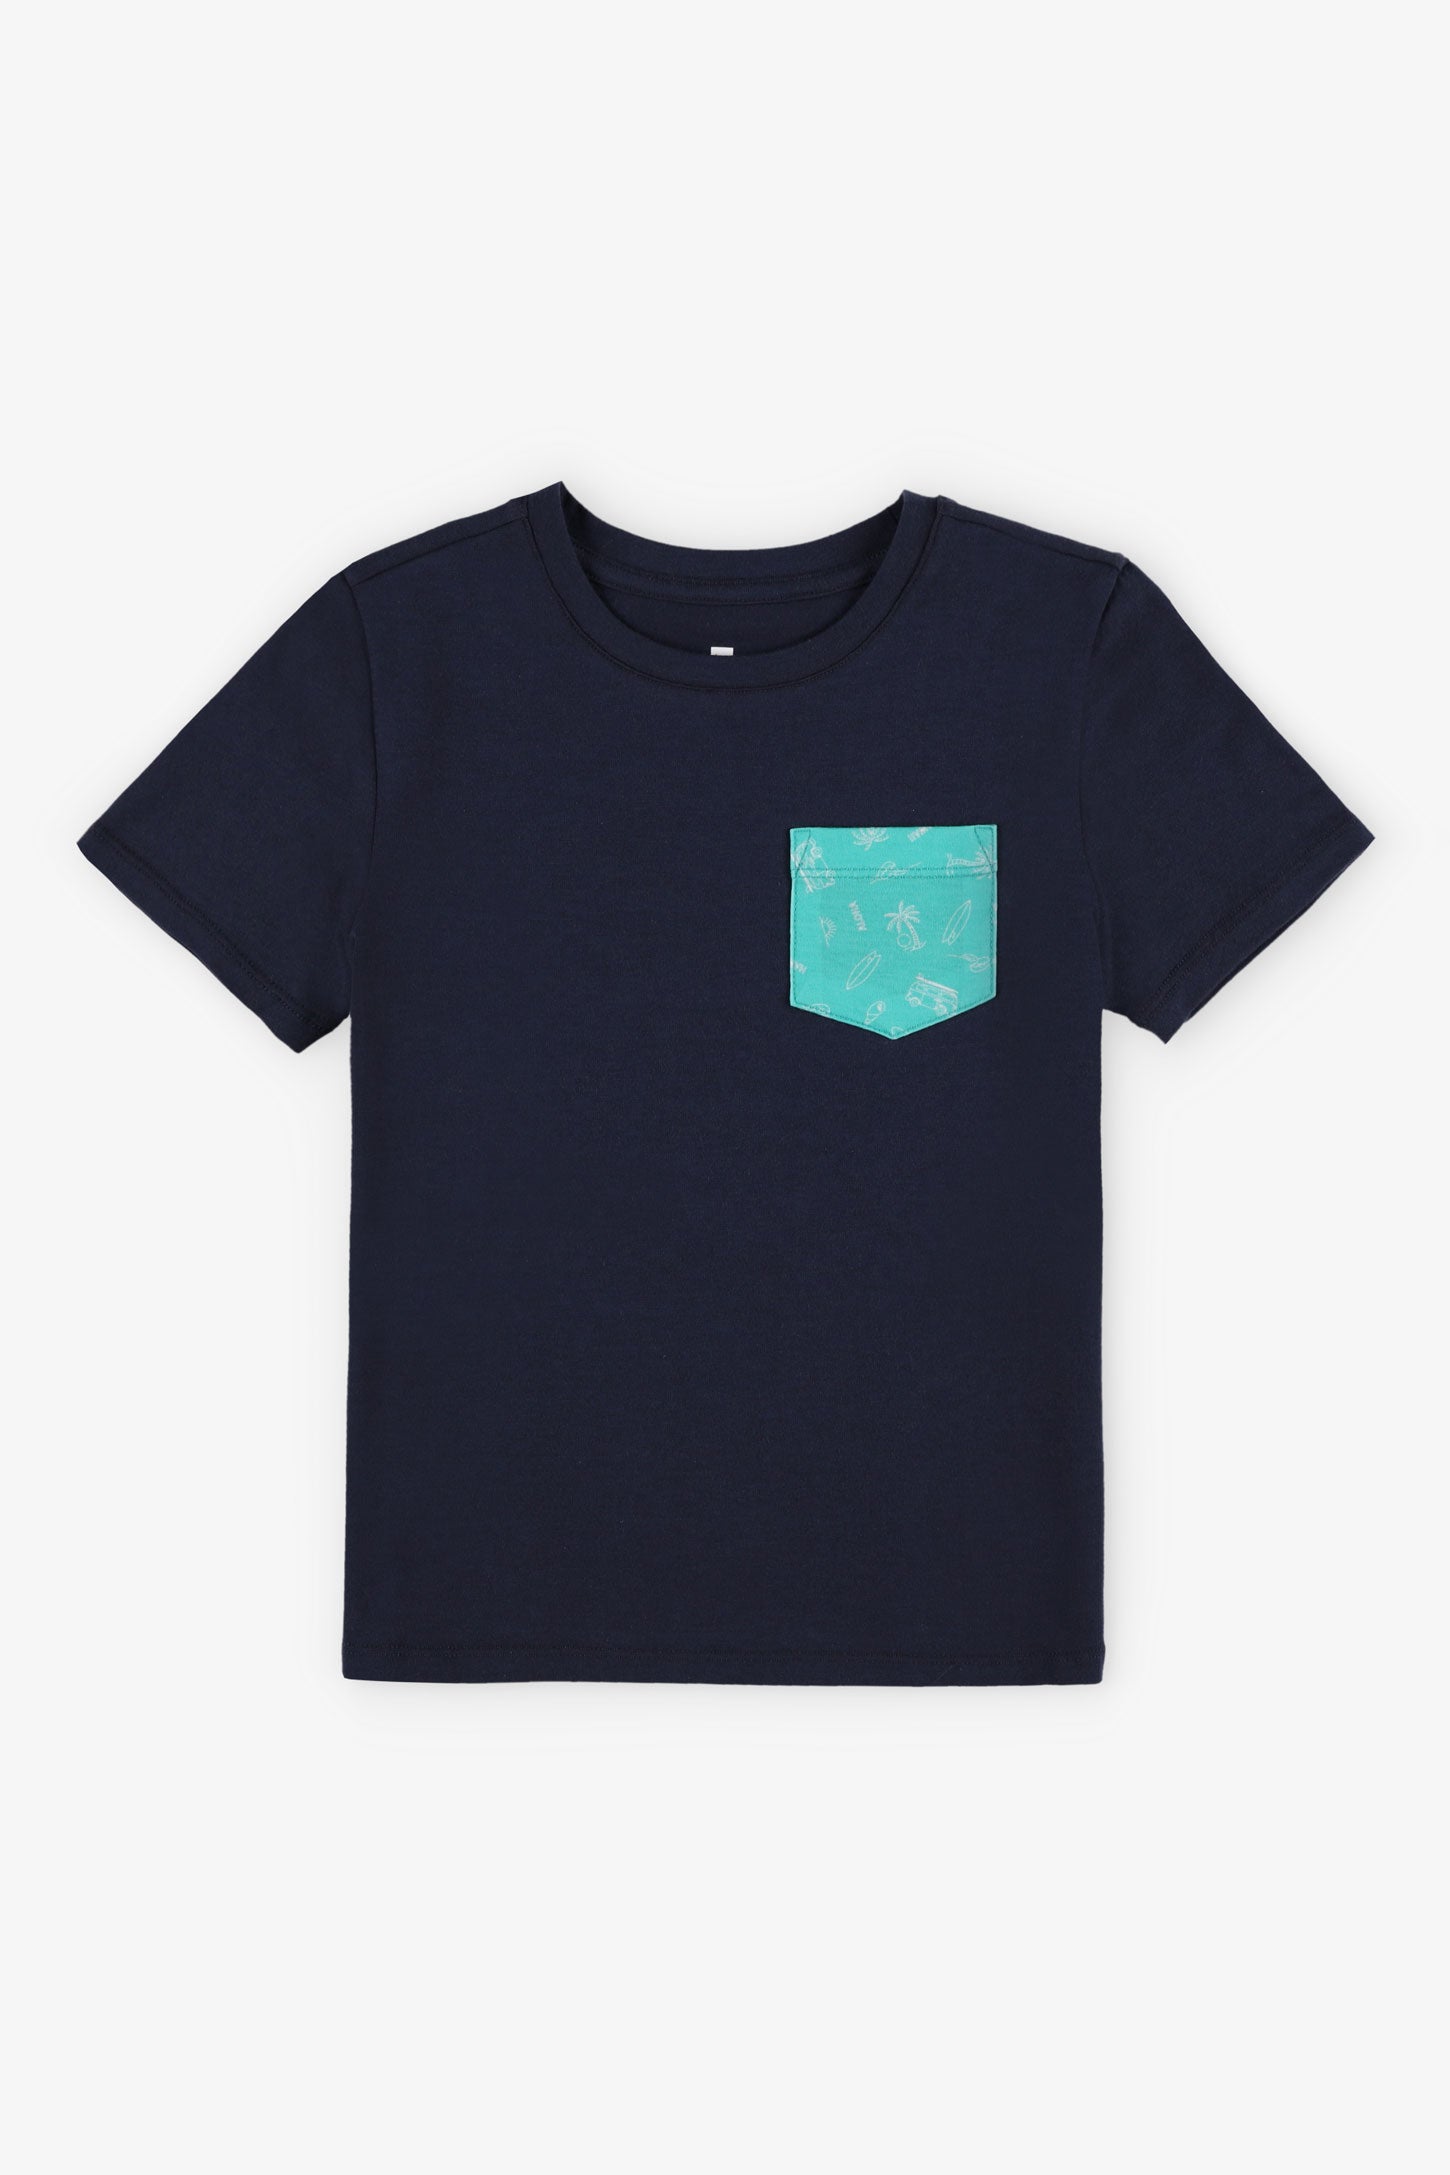 T-shirt col rond à poche, 2/20$ - Enfant garçon && BLEU MARINE